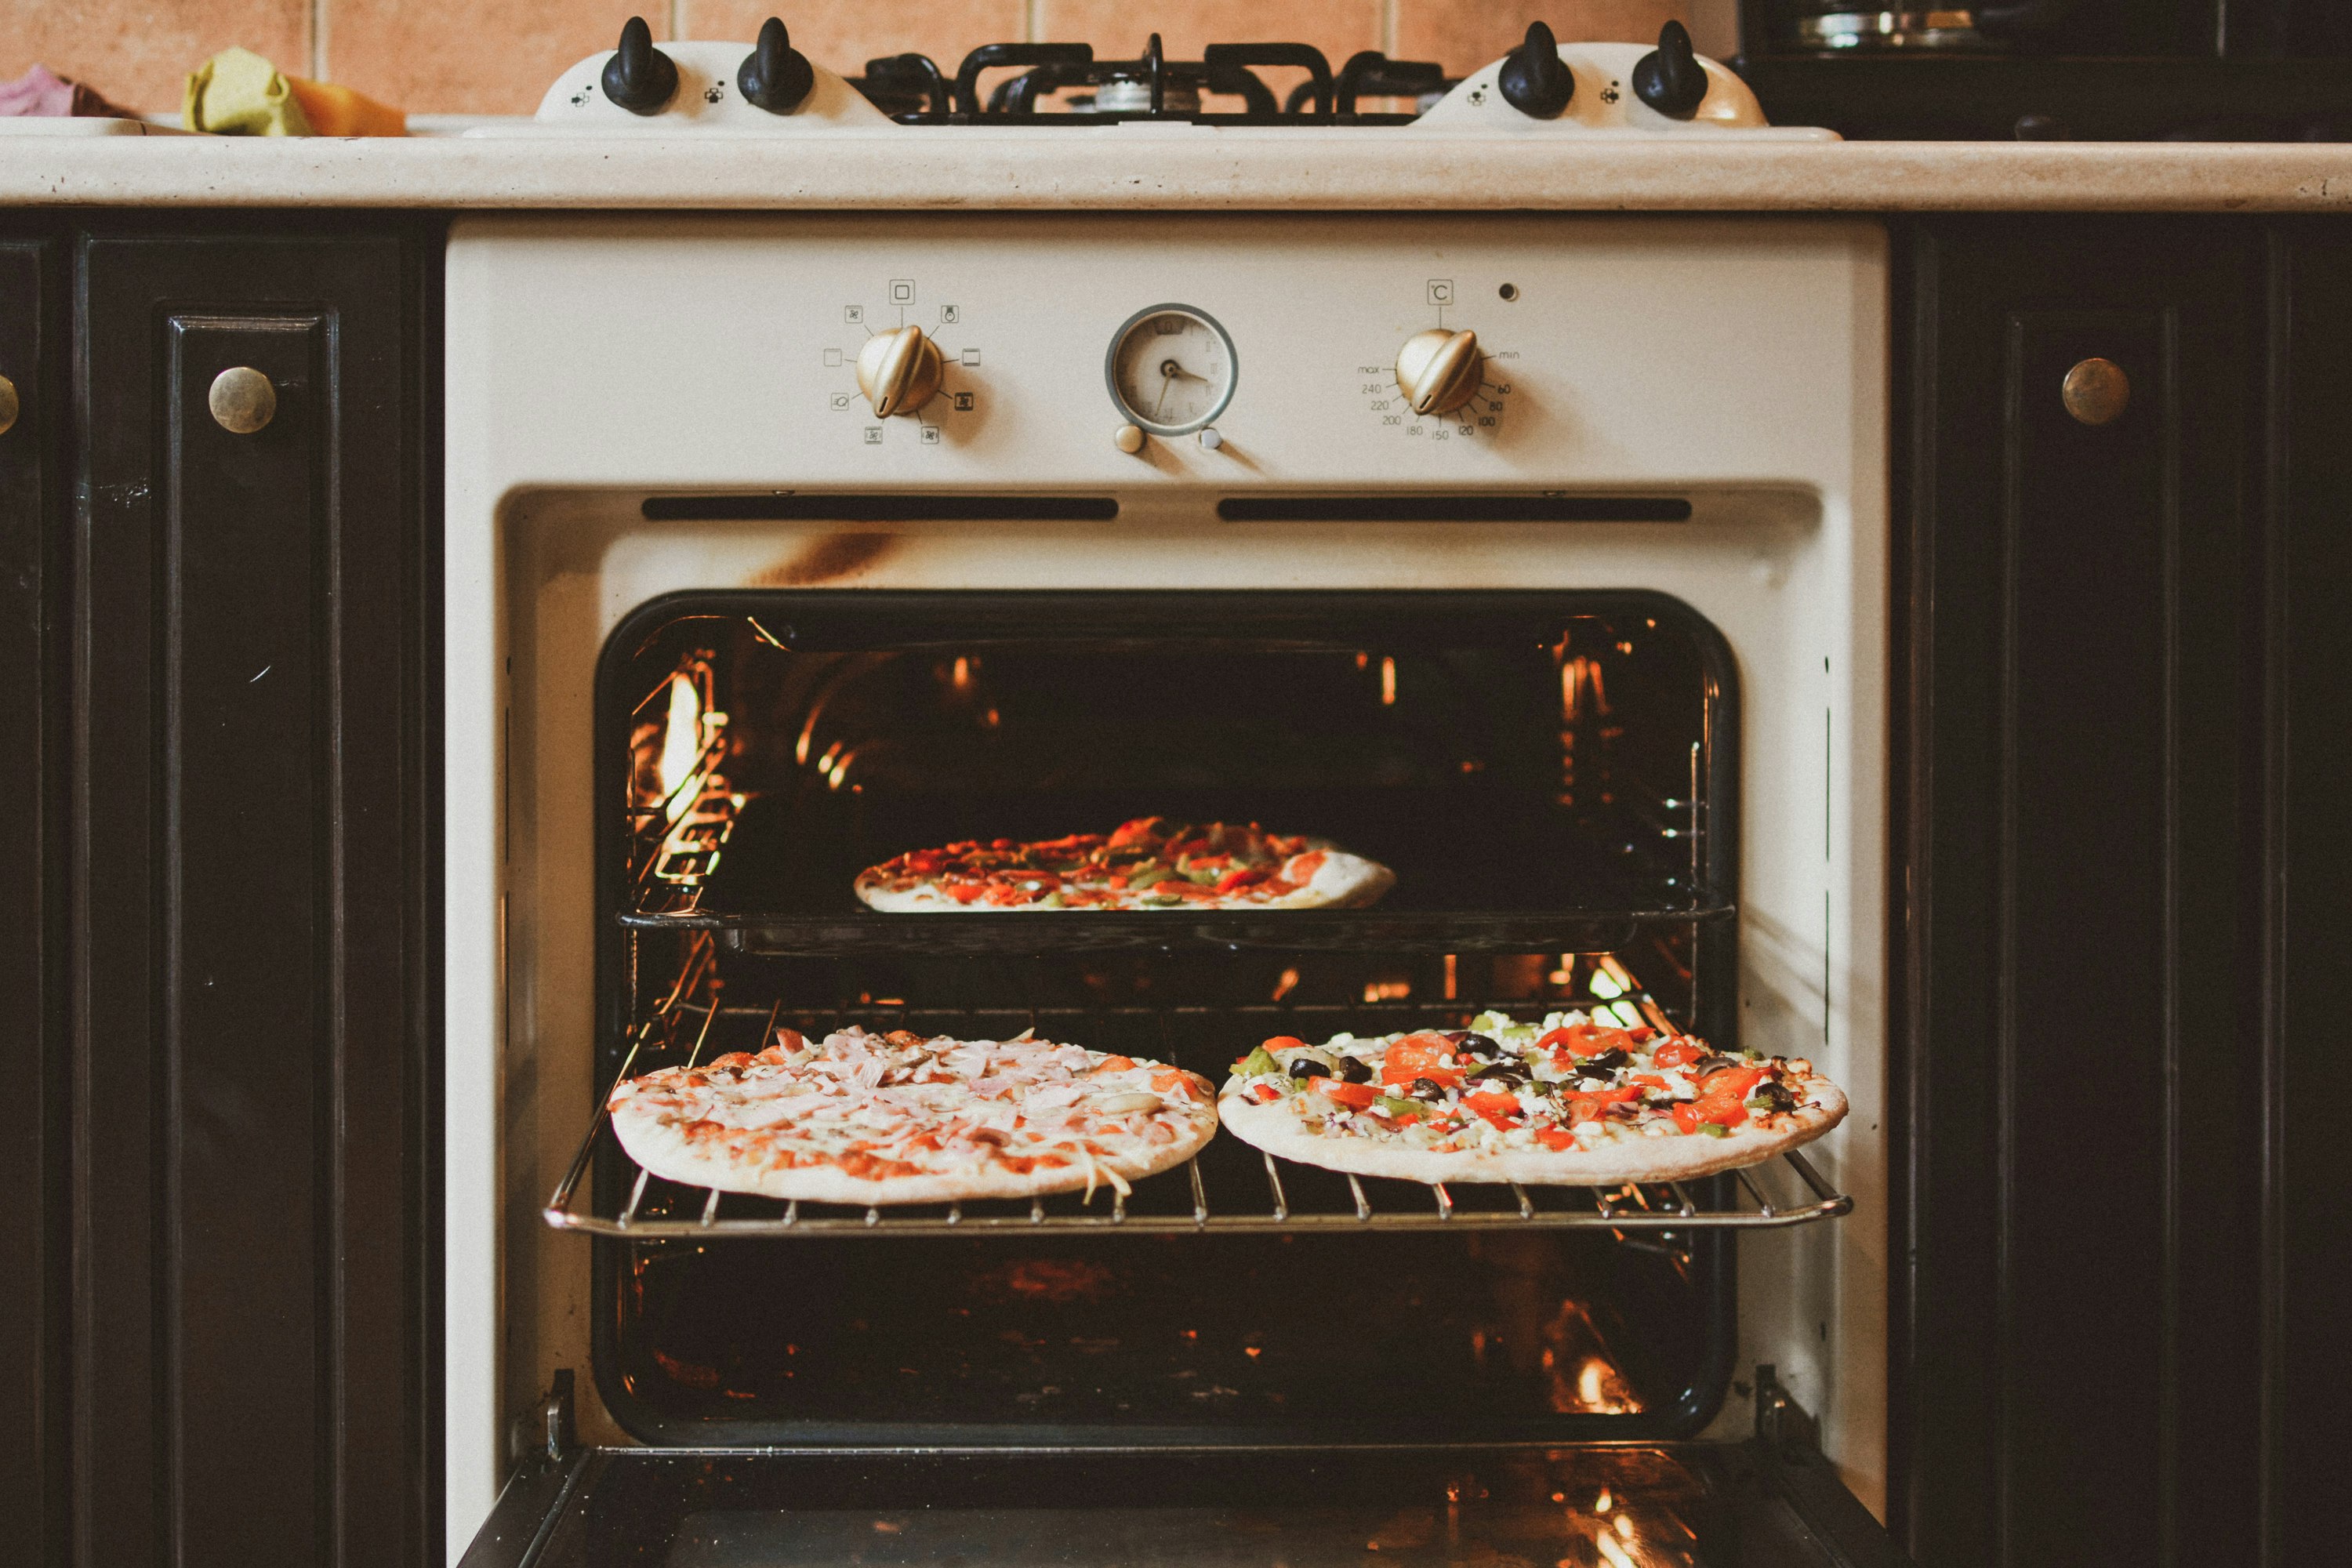 Getting pizza ready in a retro oven